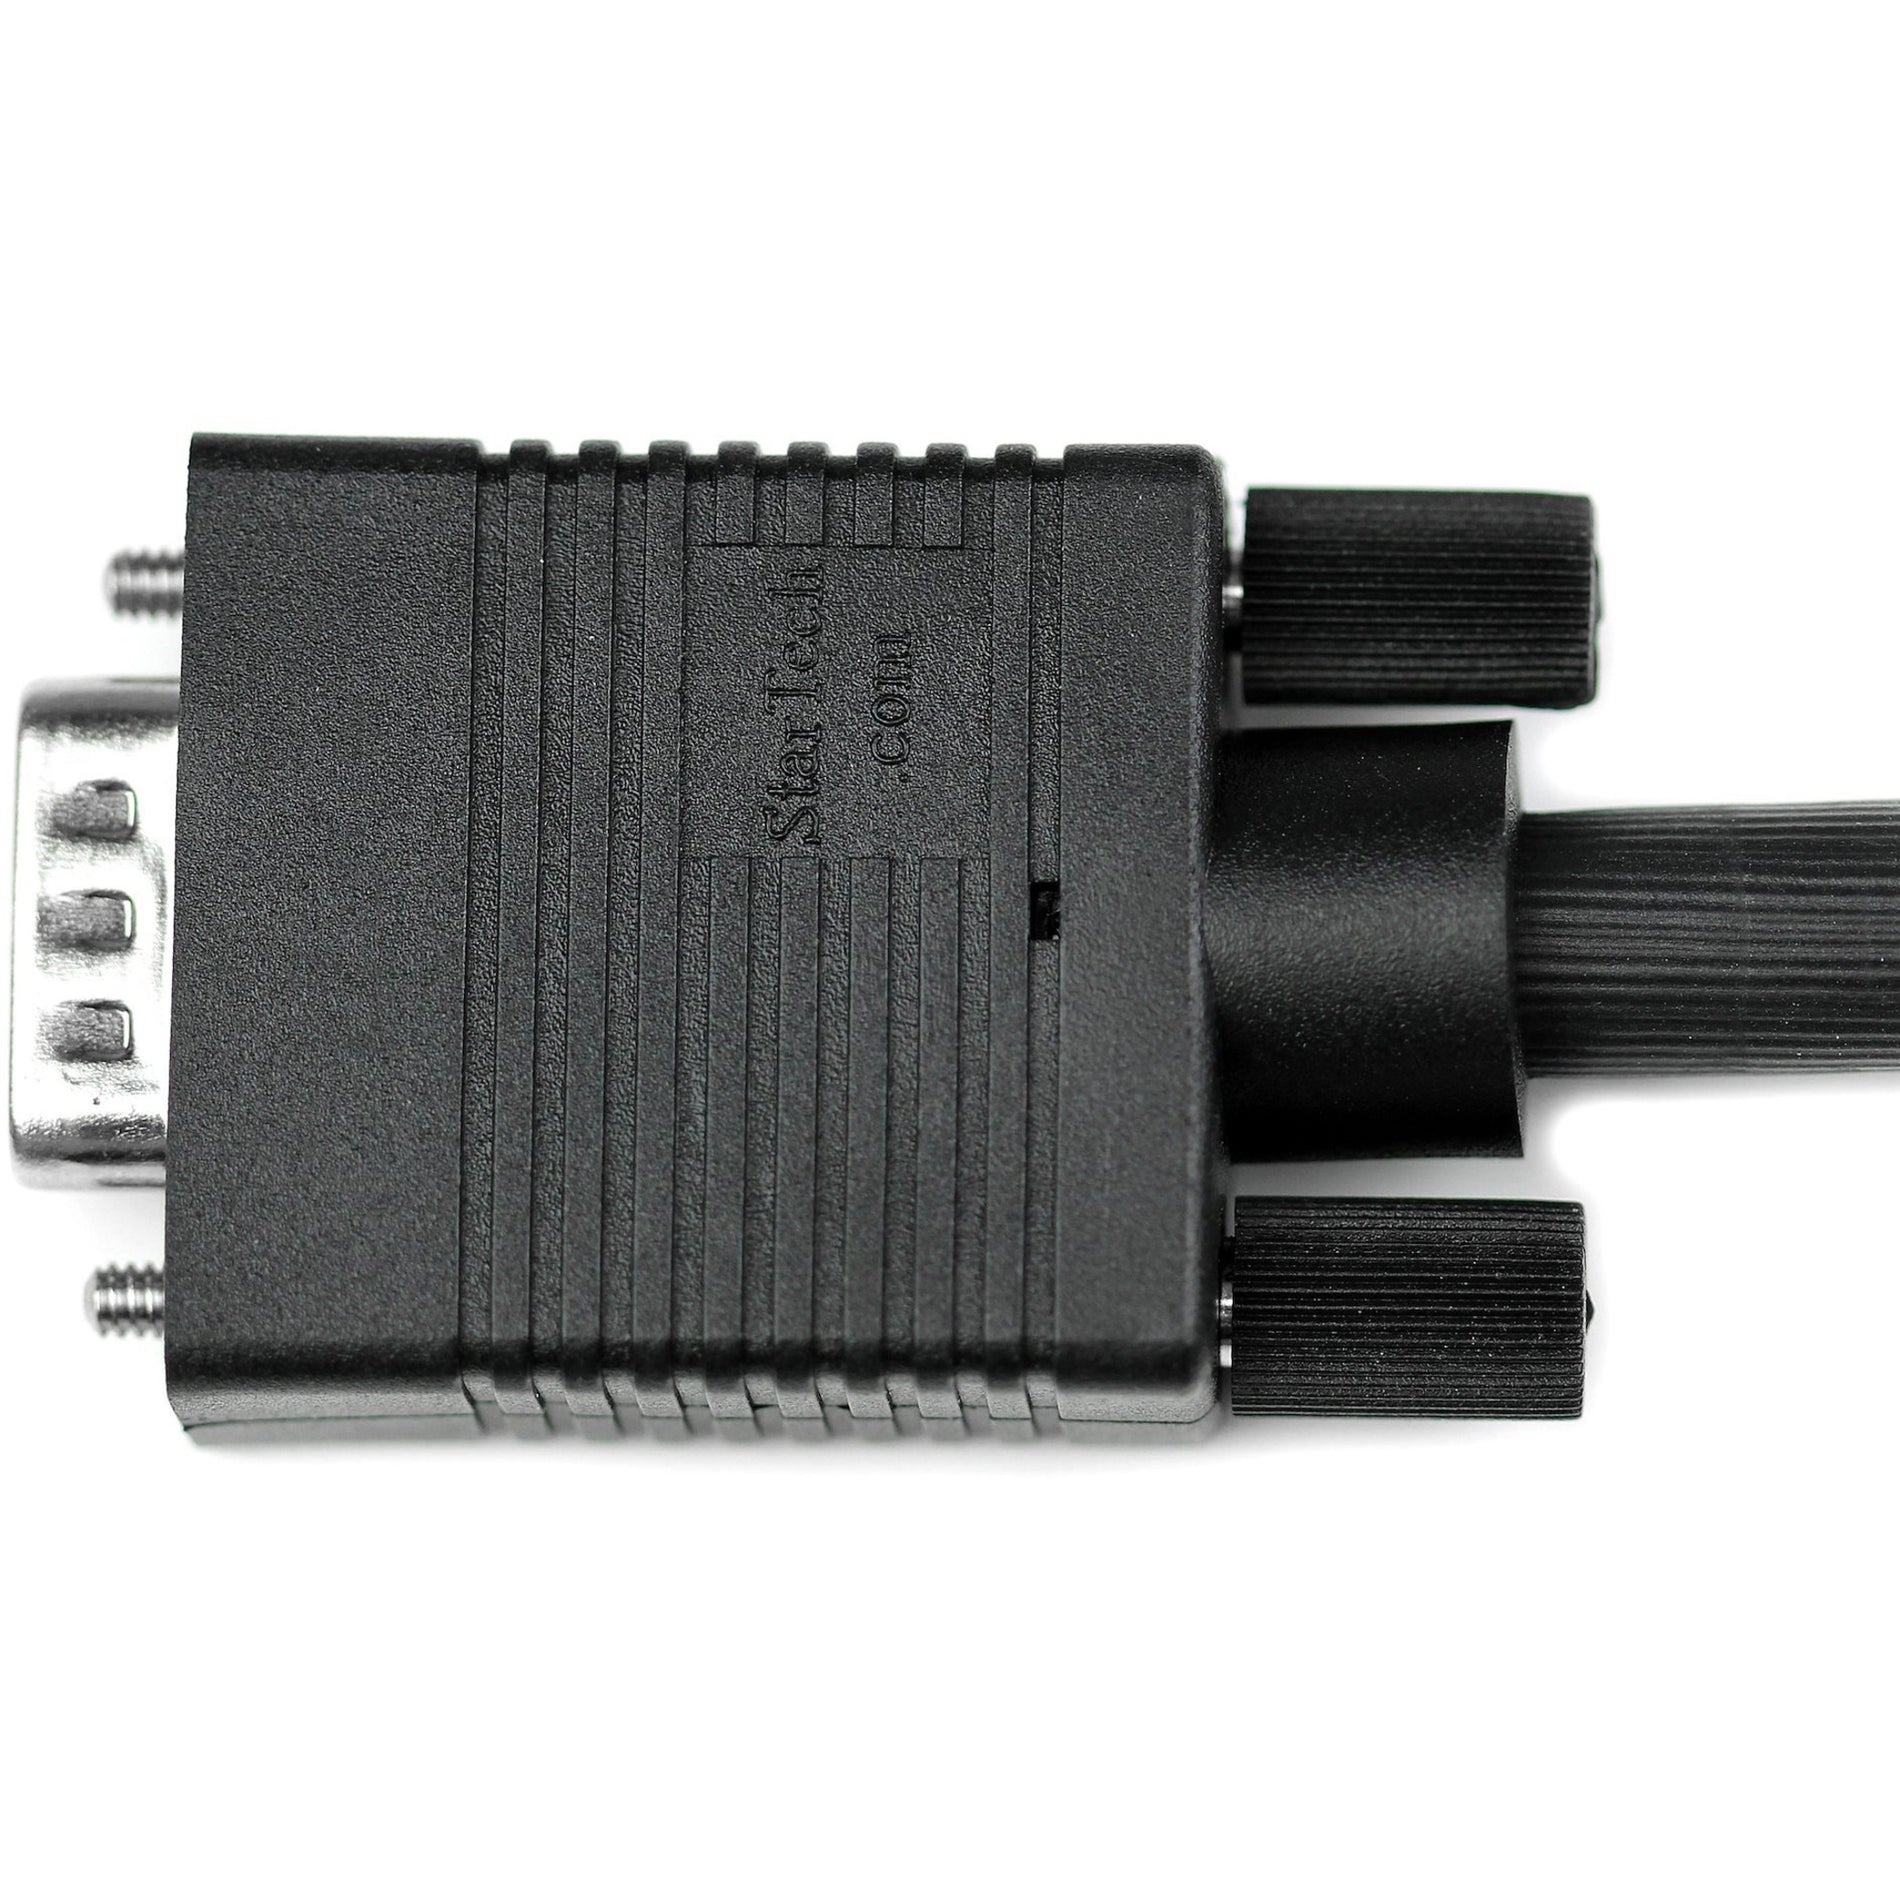 StarTech.com MXT101MMH100 Coax VGA Monitor Cable, 100 ft - High-Resolution SVGA, Molded, EMI Protection, Ferrite Bead